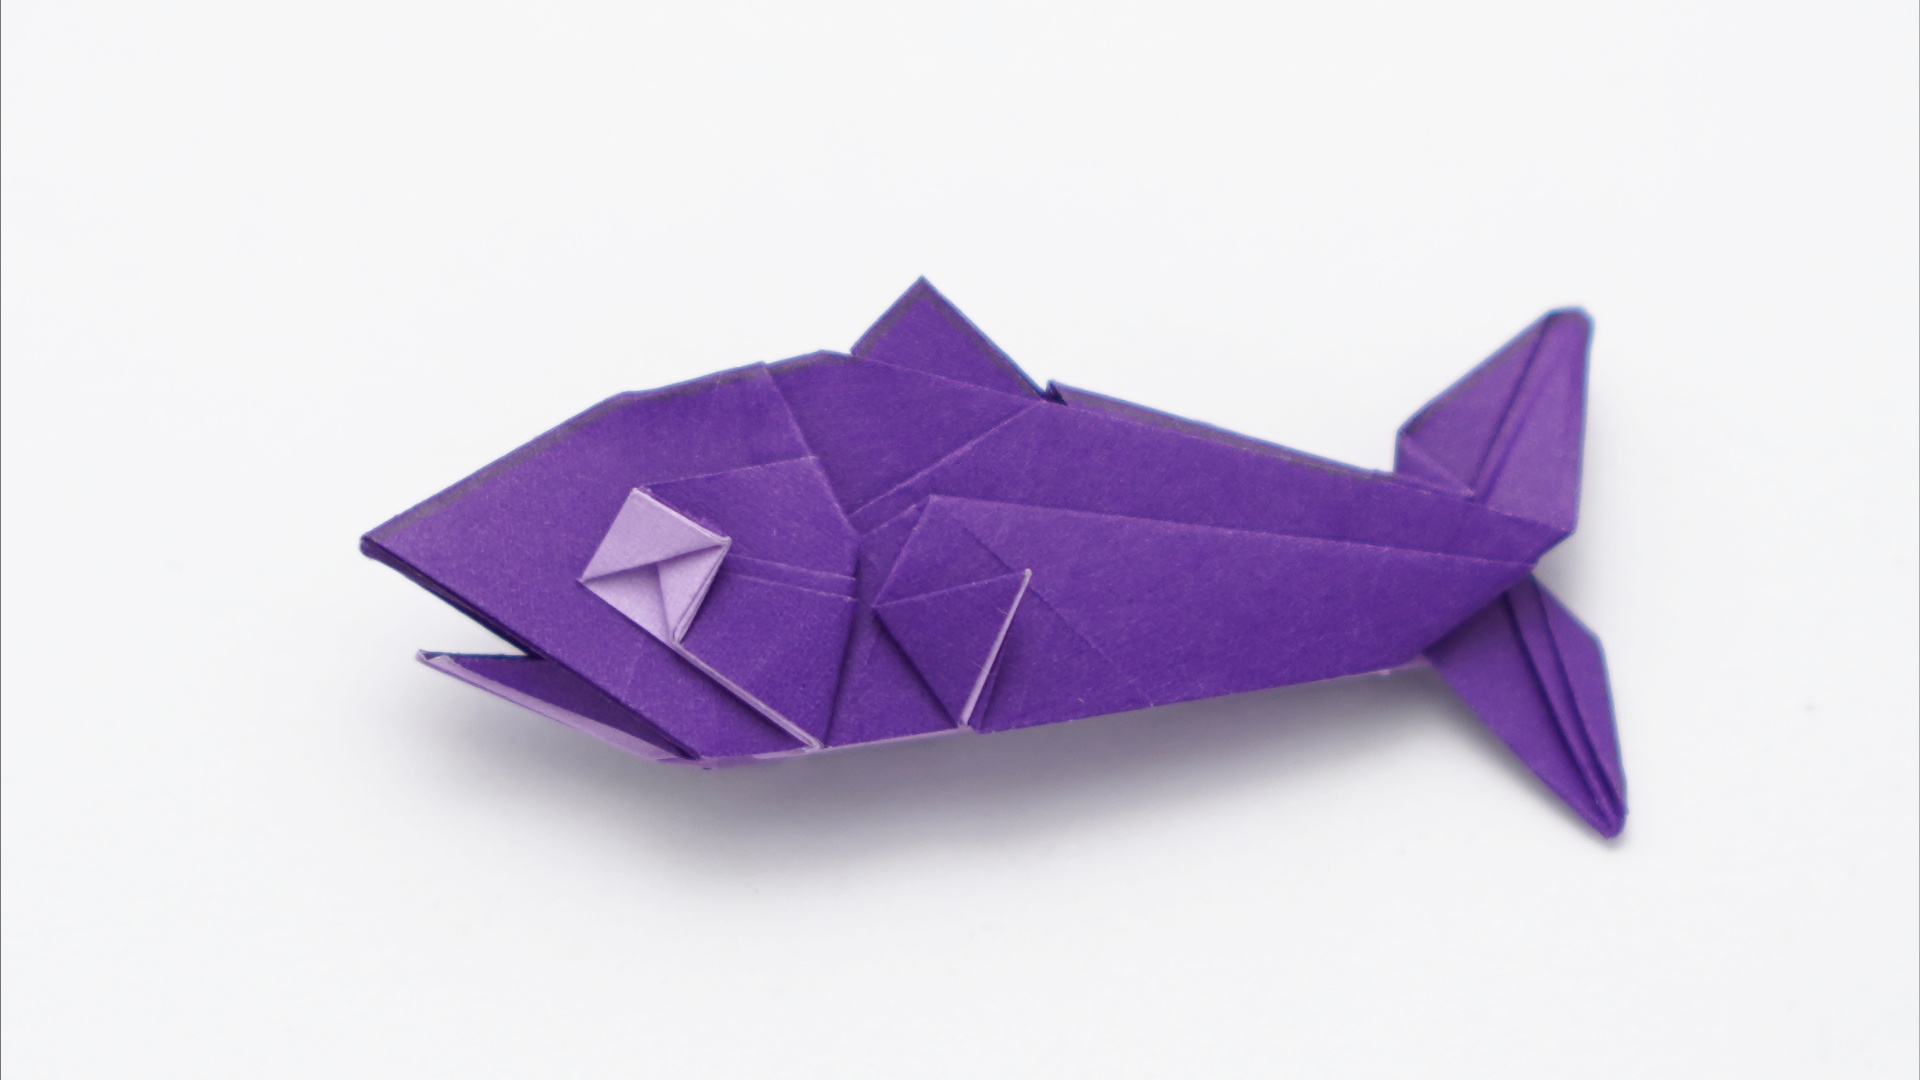 Origami Dragon v3 - Jo Nakashima